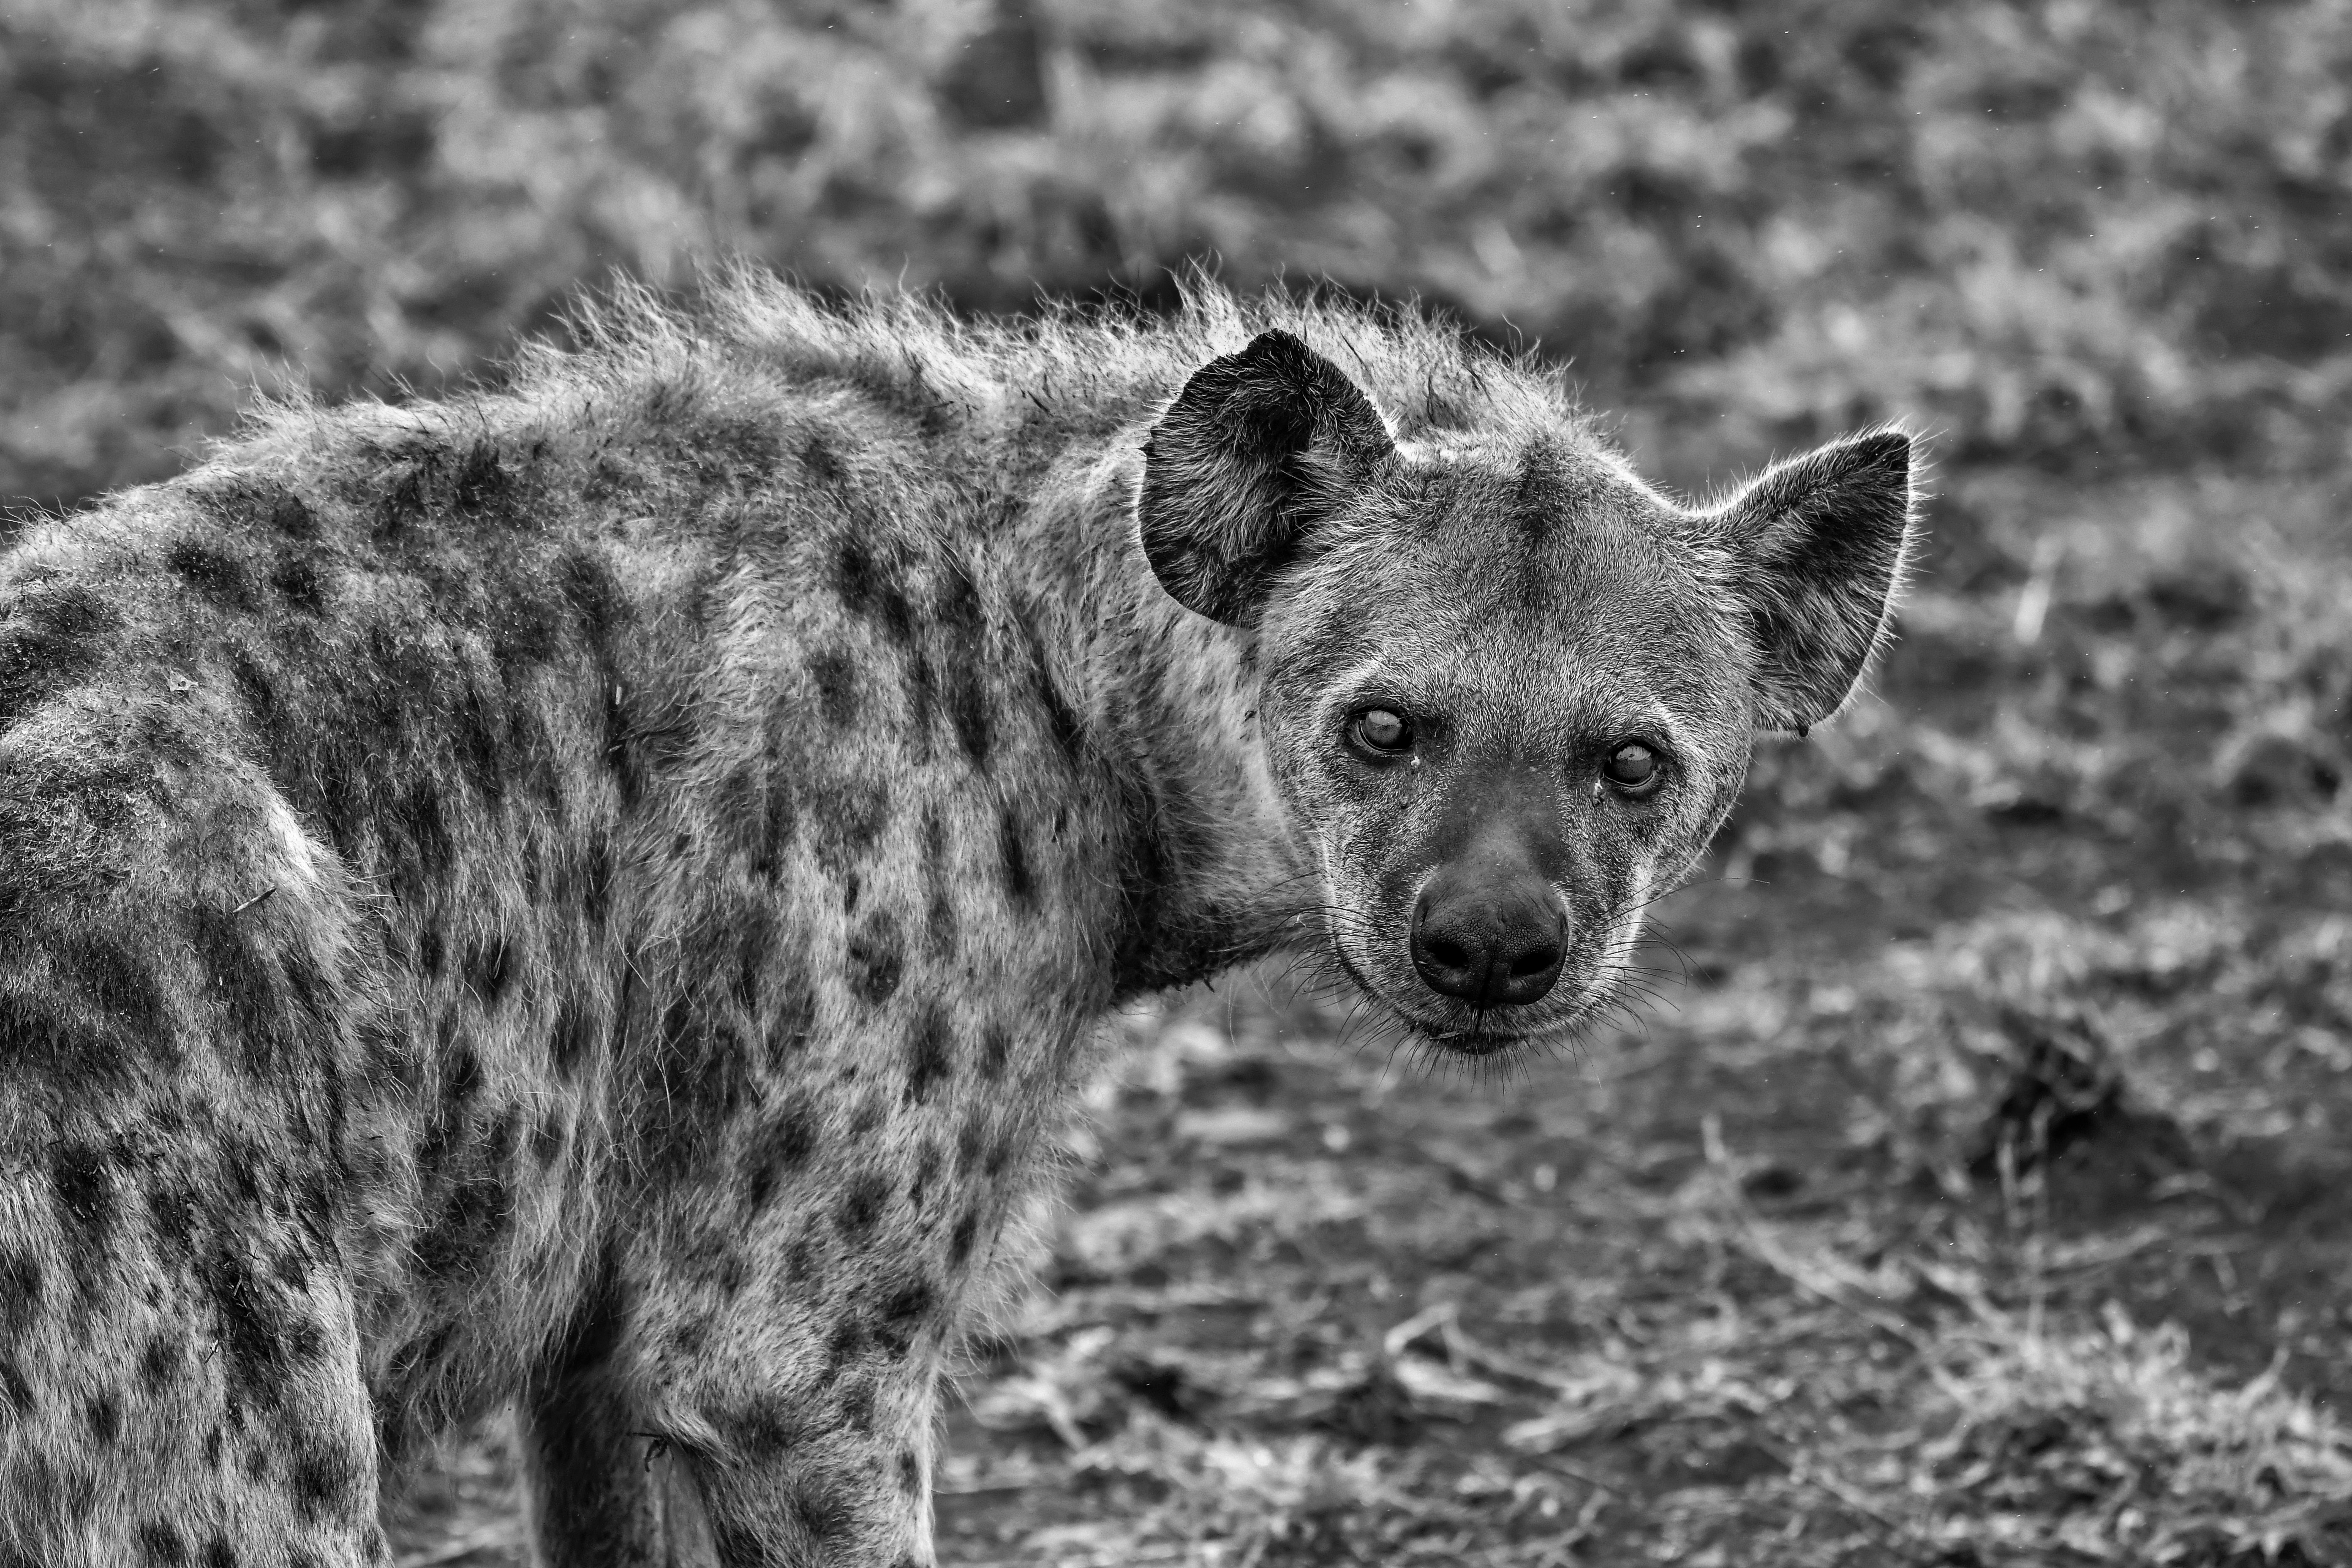 Grayscale photography of hyena